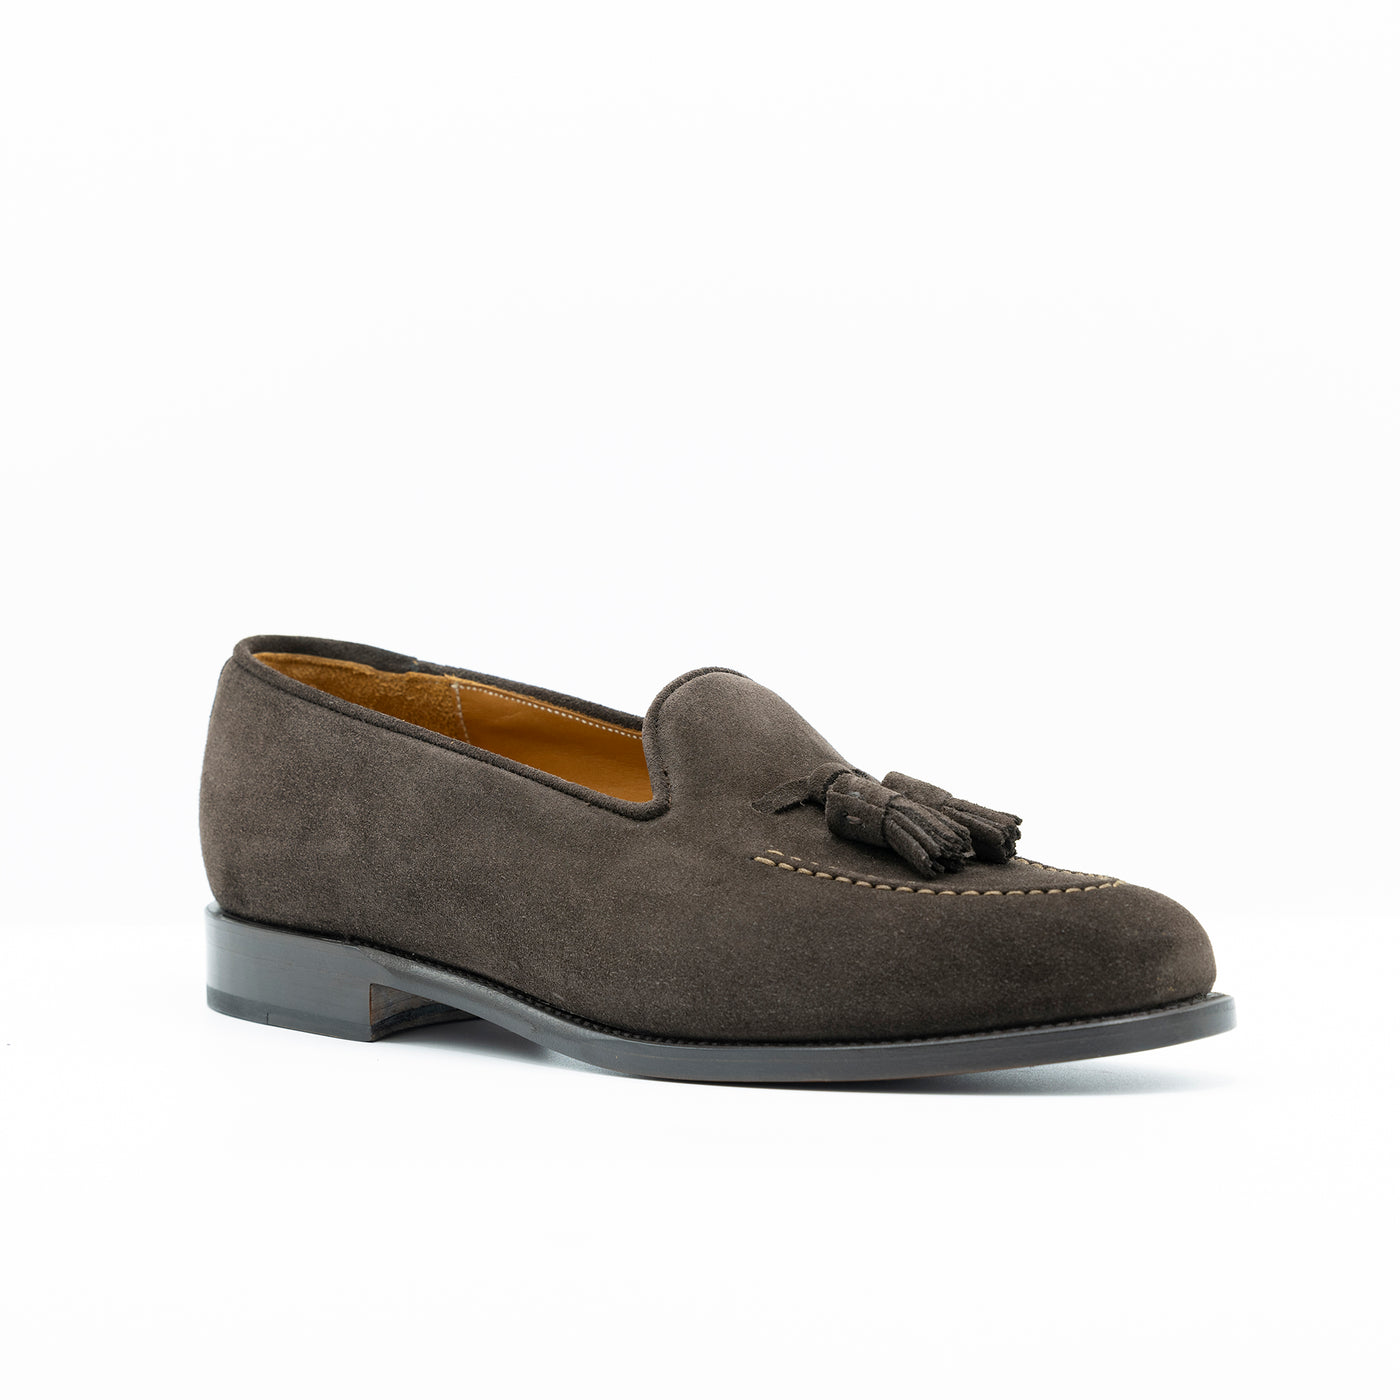 Deep brown tassel loafer set on edgestitched leather soles.